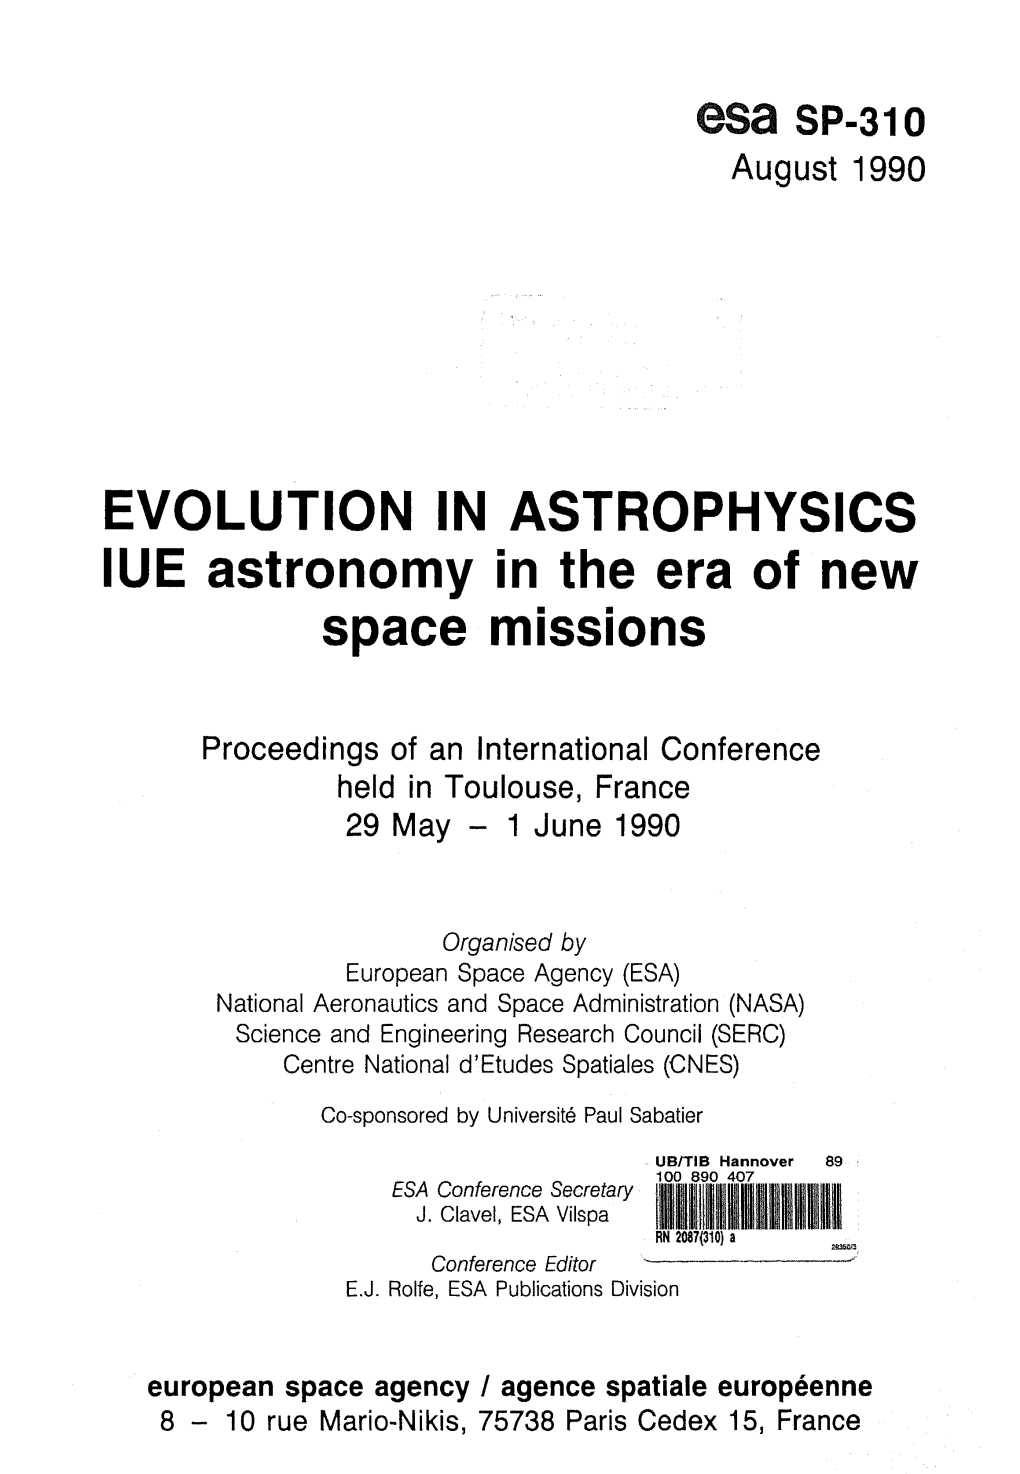 International Conference on Evolution in Astrophysics